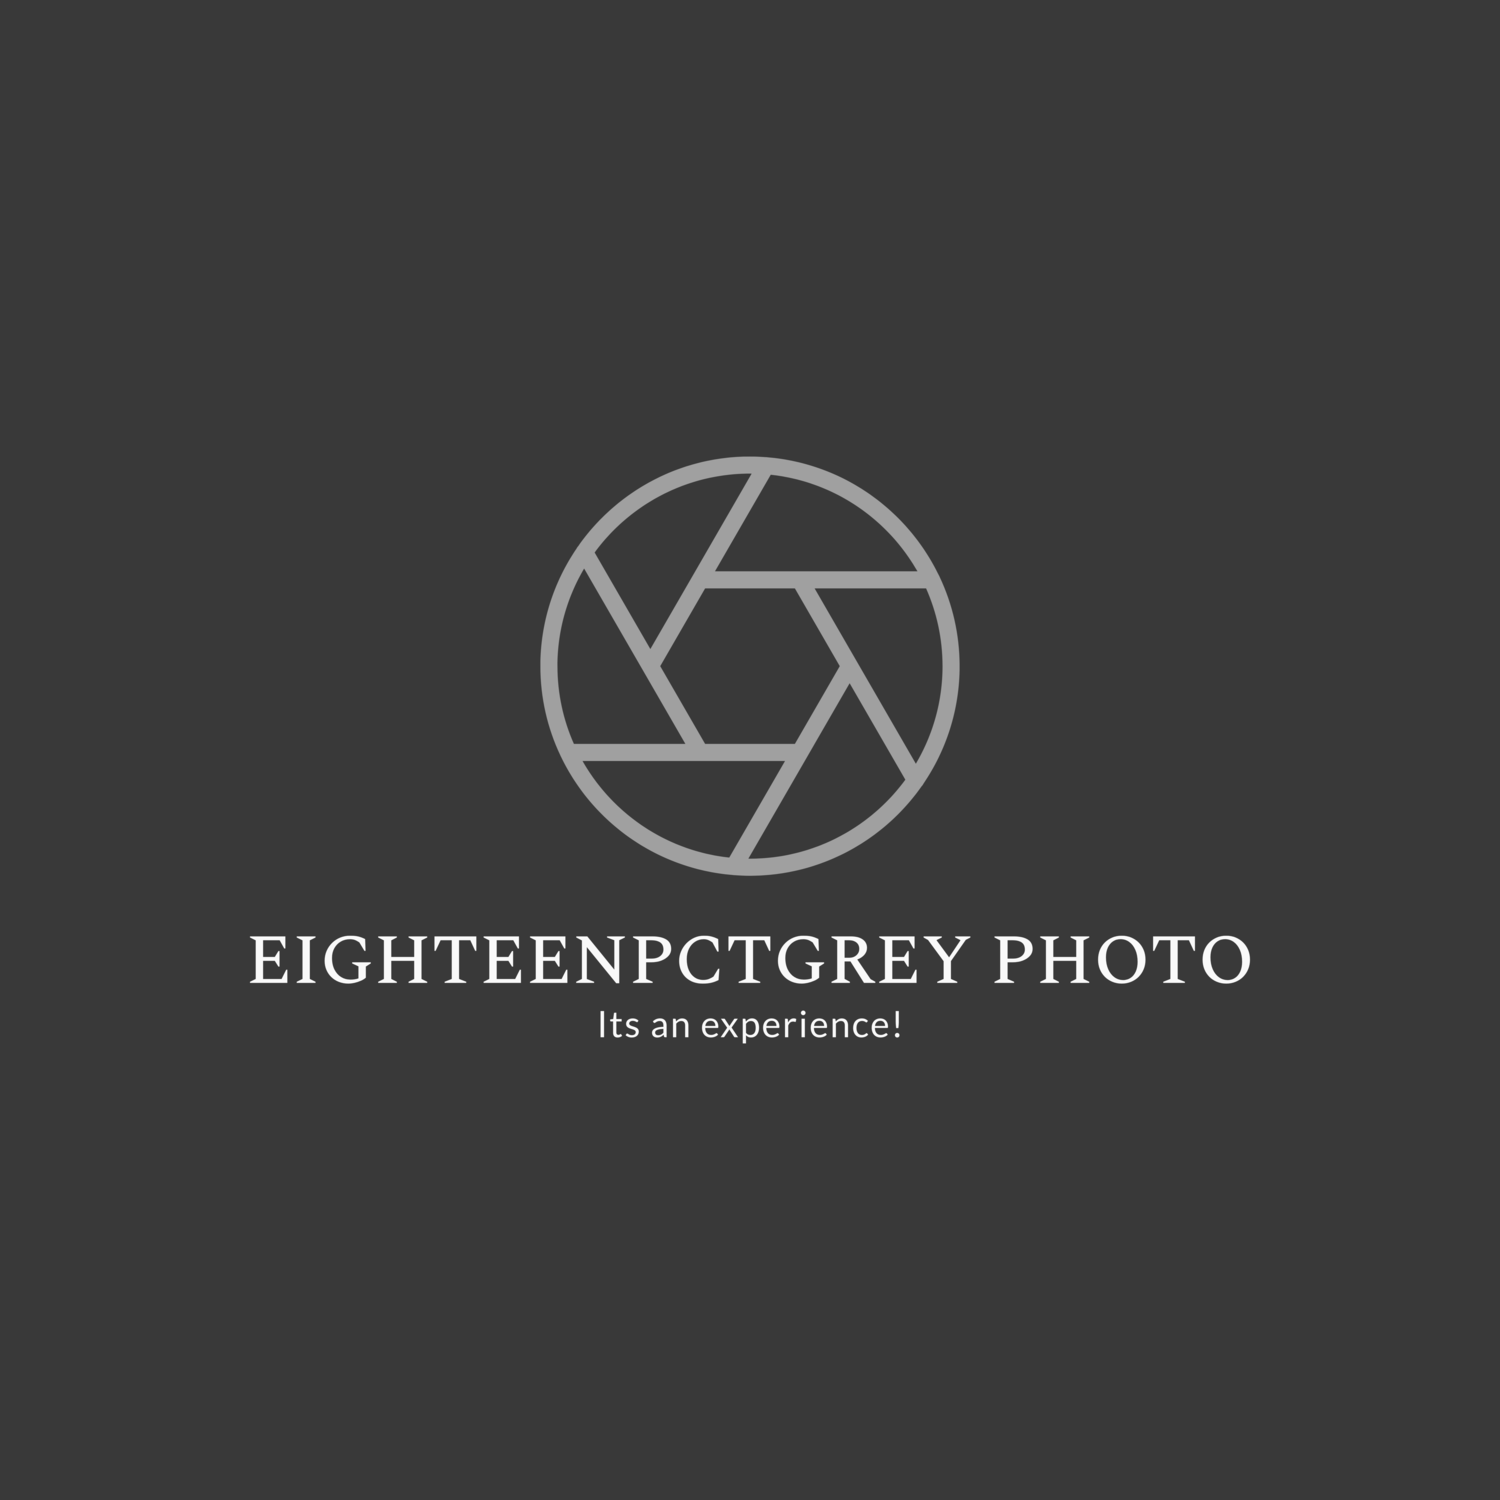 GUSTAVO TRUJILLO PHOTOGRAPHY - @eighteenpctgrey